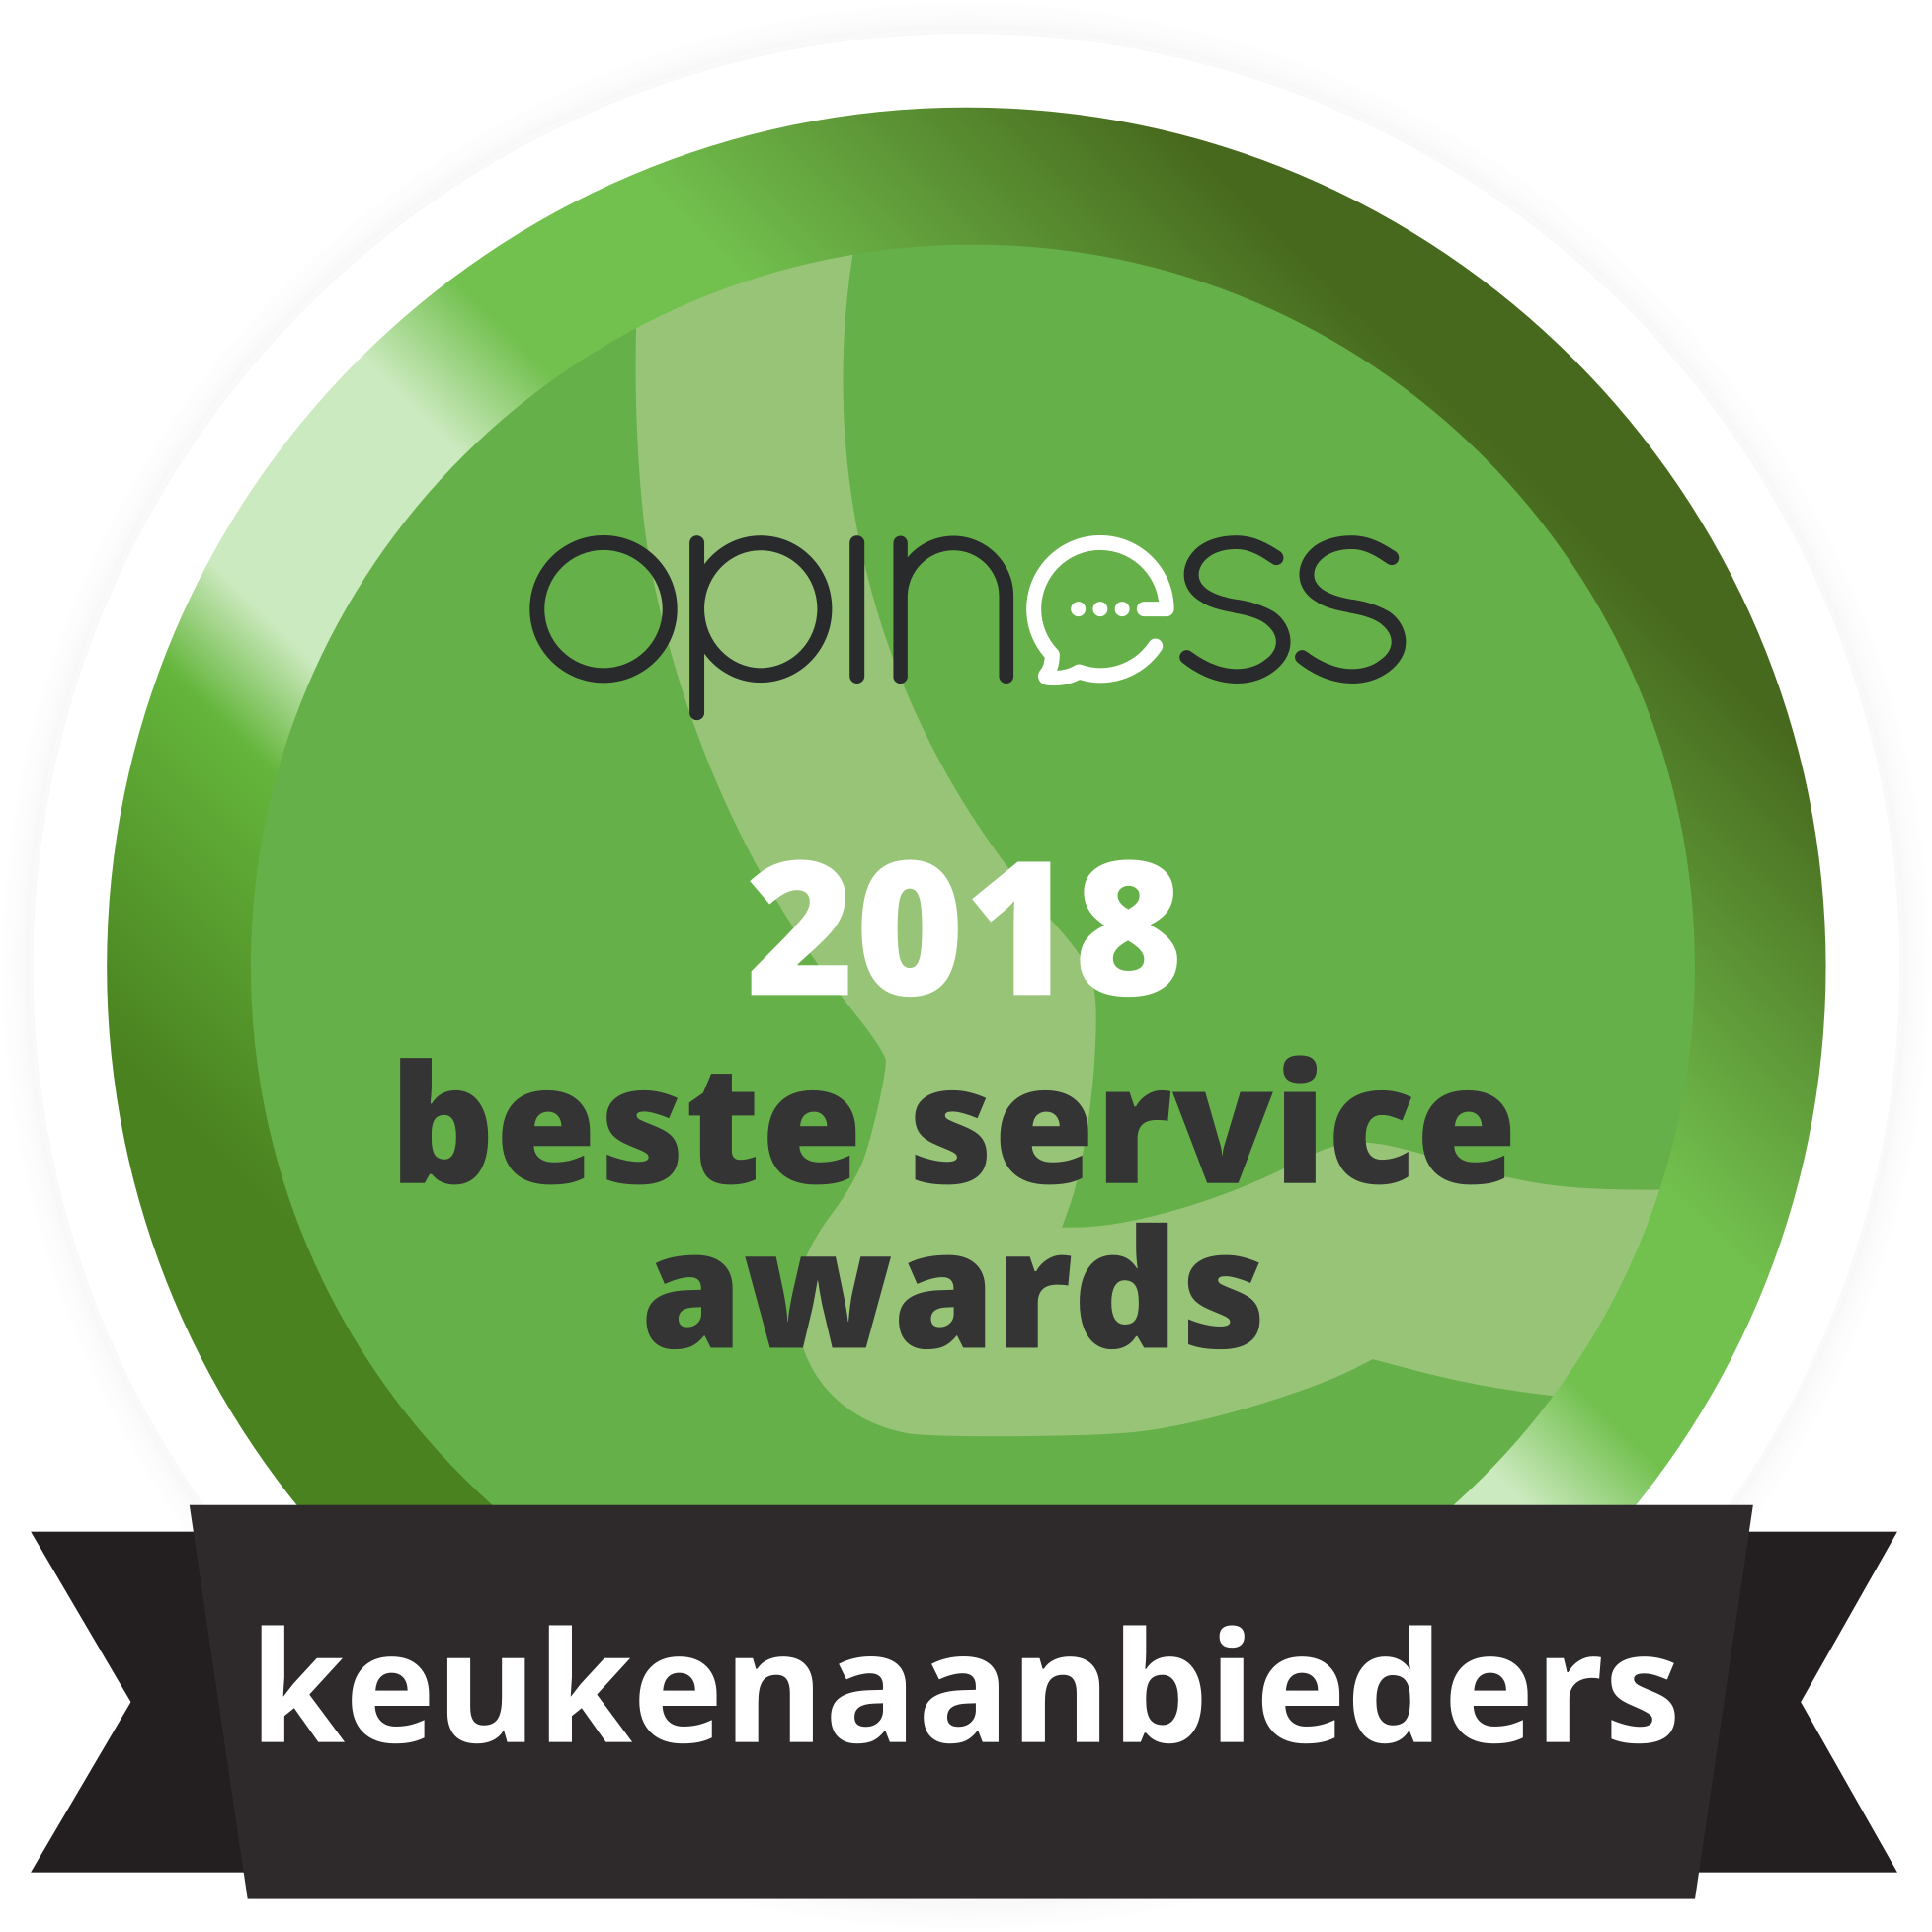 Foto: Medal BSA keukenaanbieders_opiness beste service award_tieleman keukens_2018